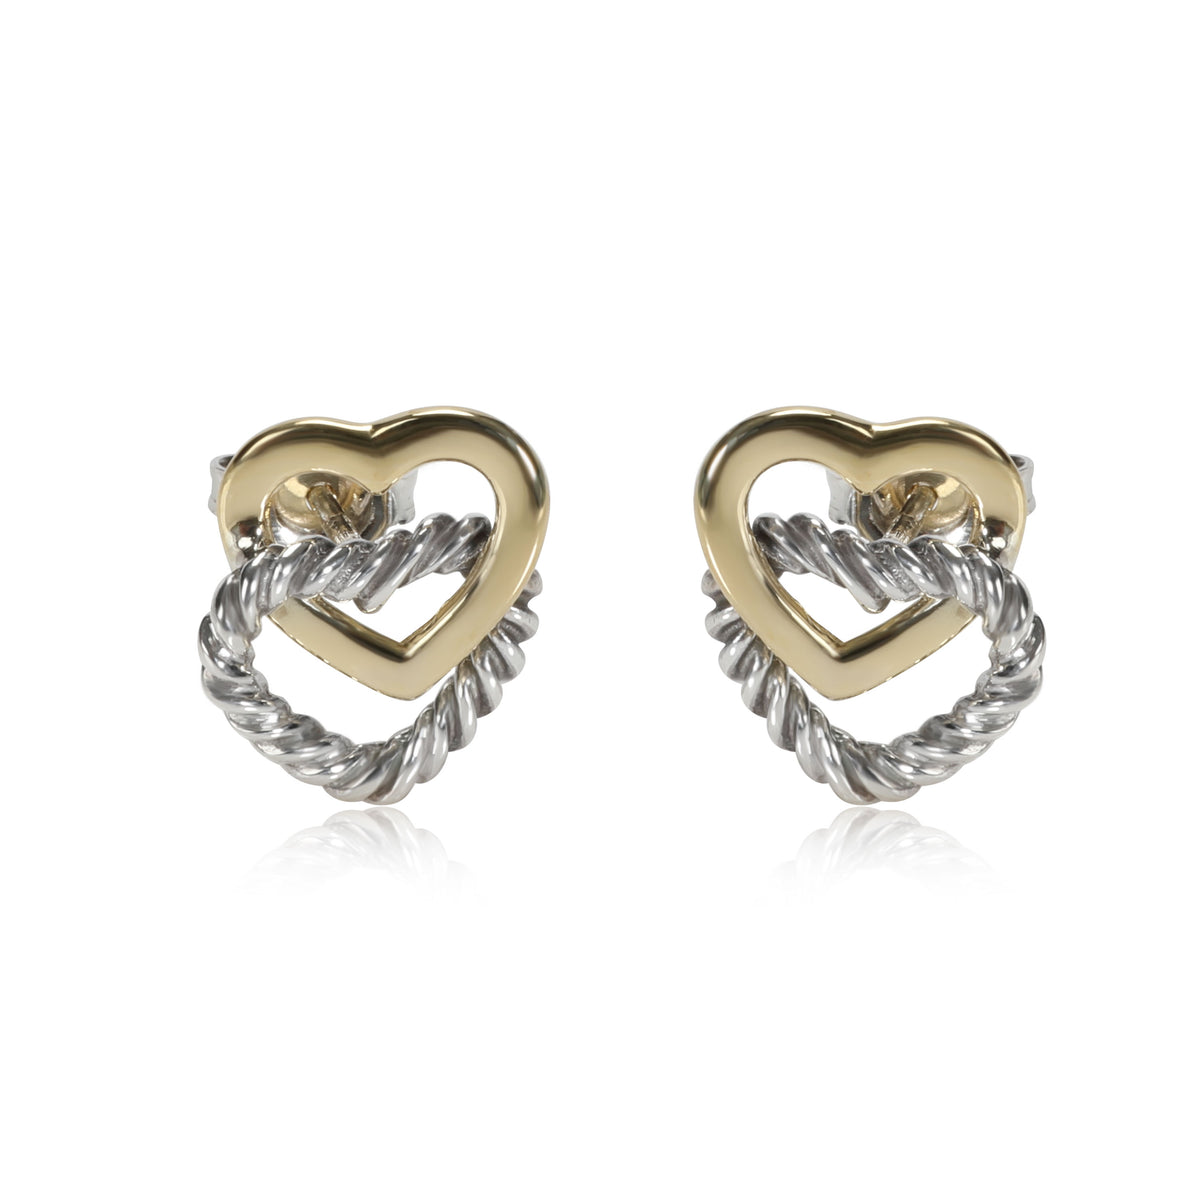 David Yurman Cable Heart Stud Earring in 18K Yellow Gold/Sterling Silver